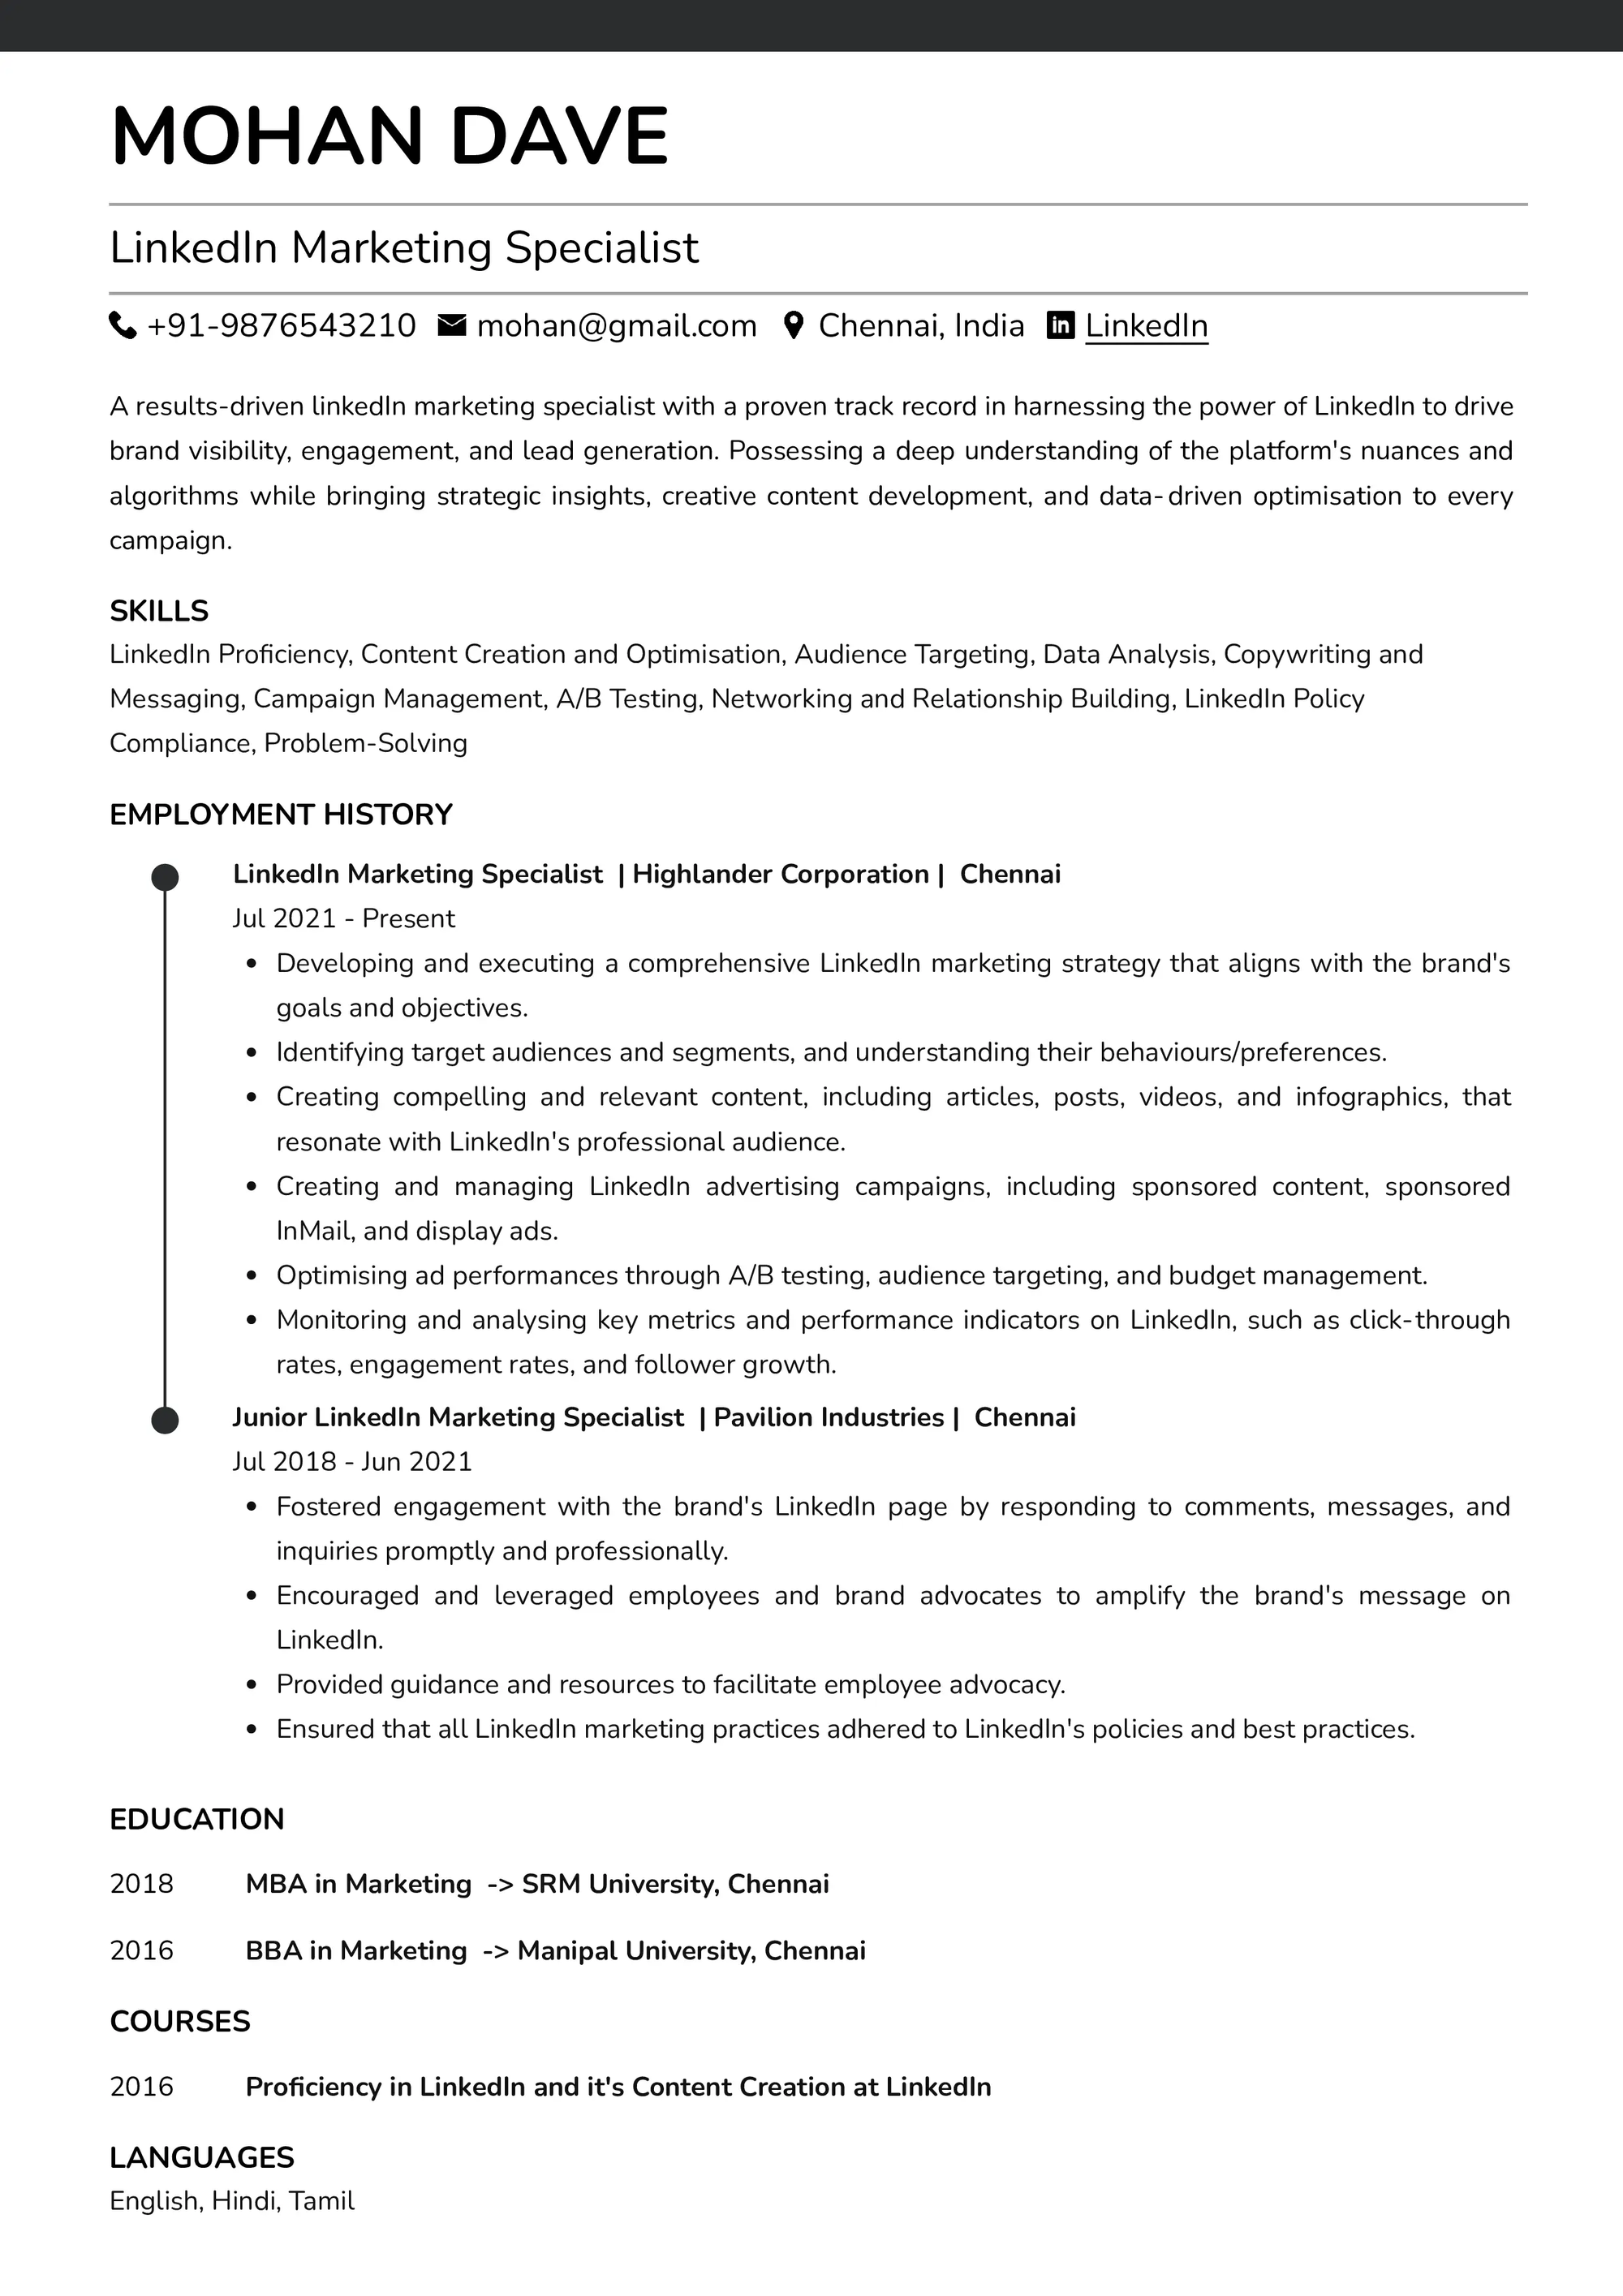 Resume of LinkedIn Marketing Specialist built on Resumod